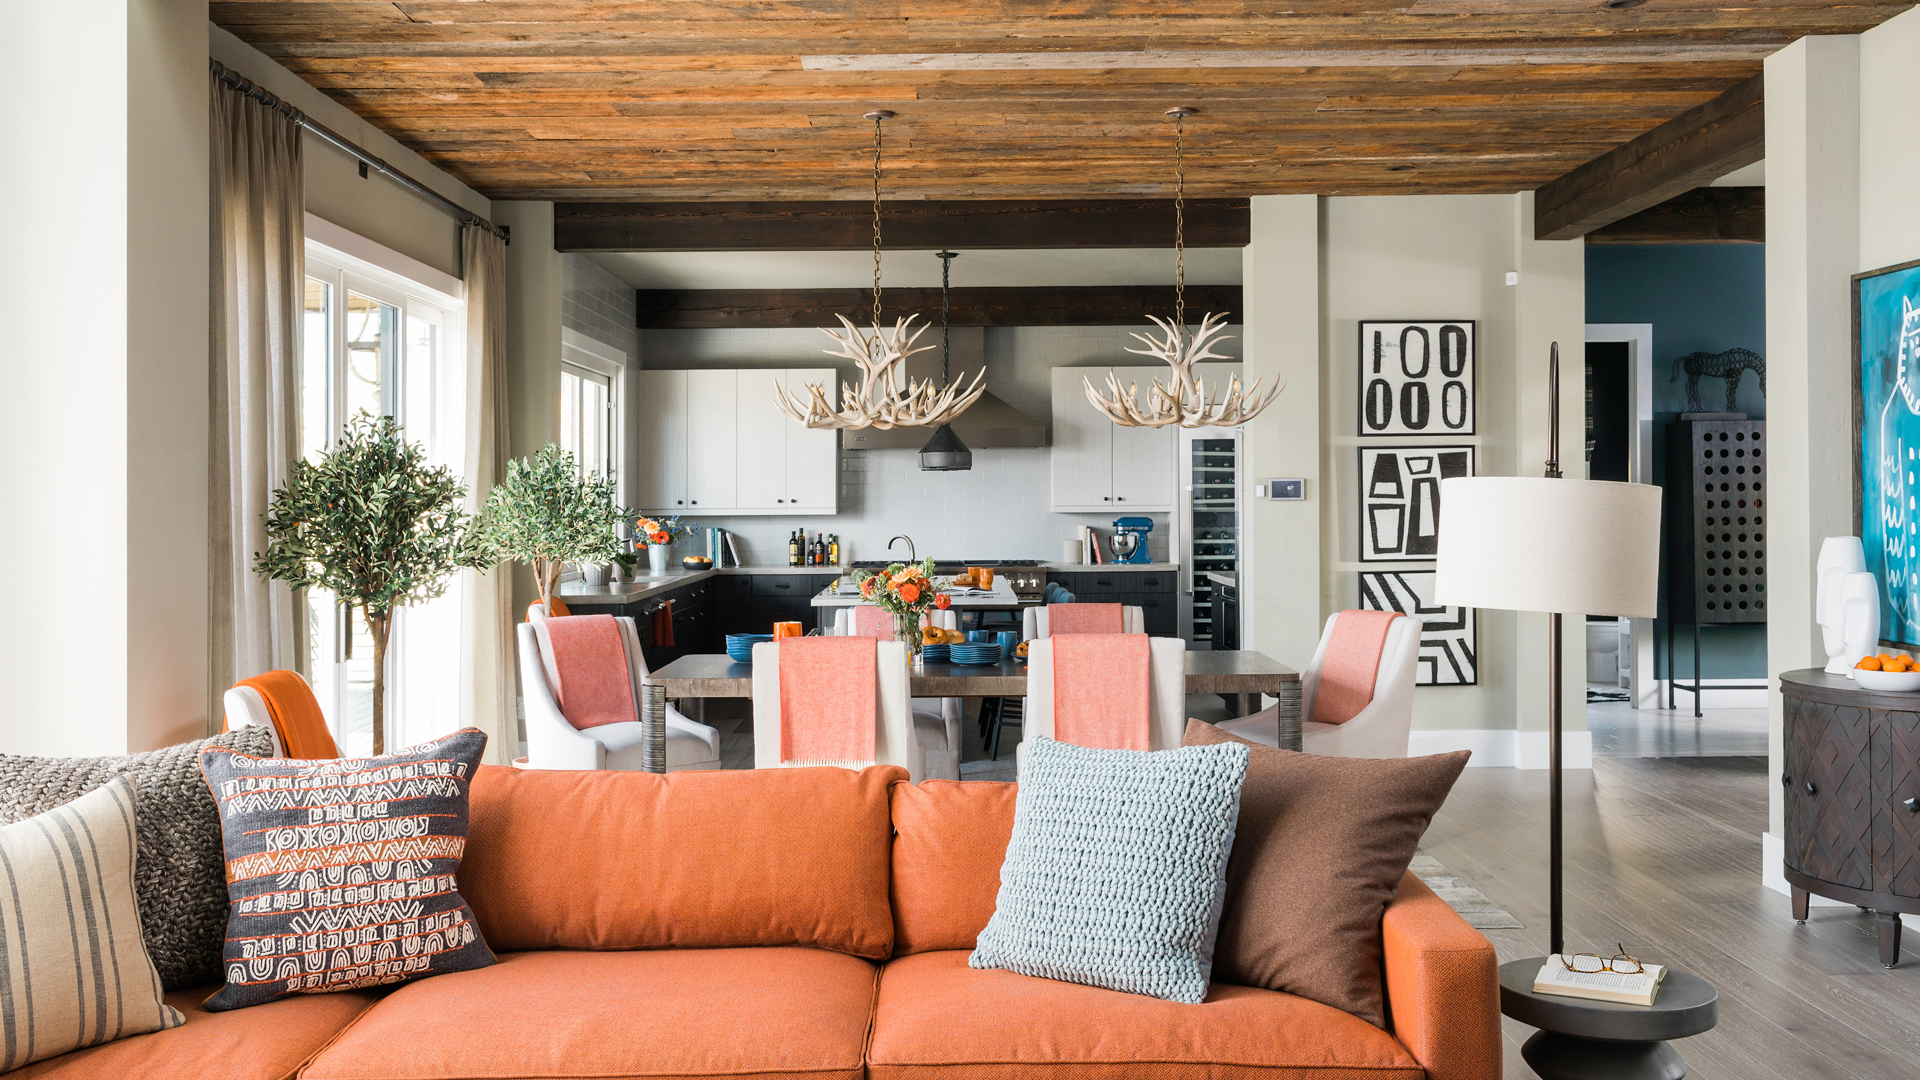 Hgtv Dream Home 2019 Interior - HD Wallpaper 